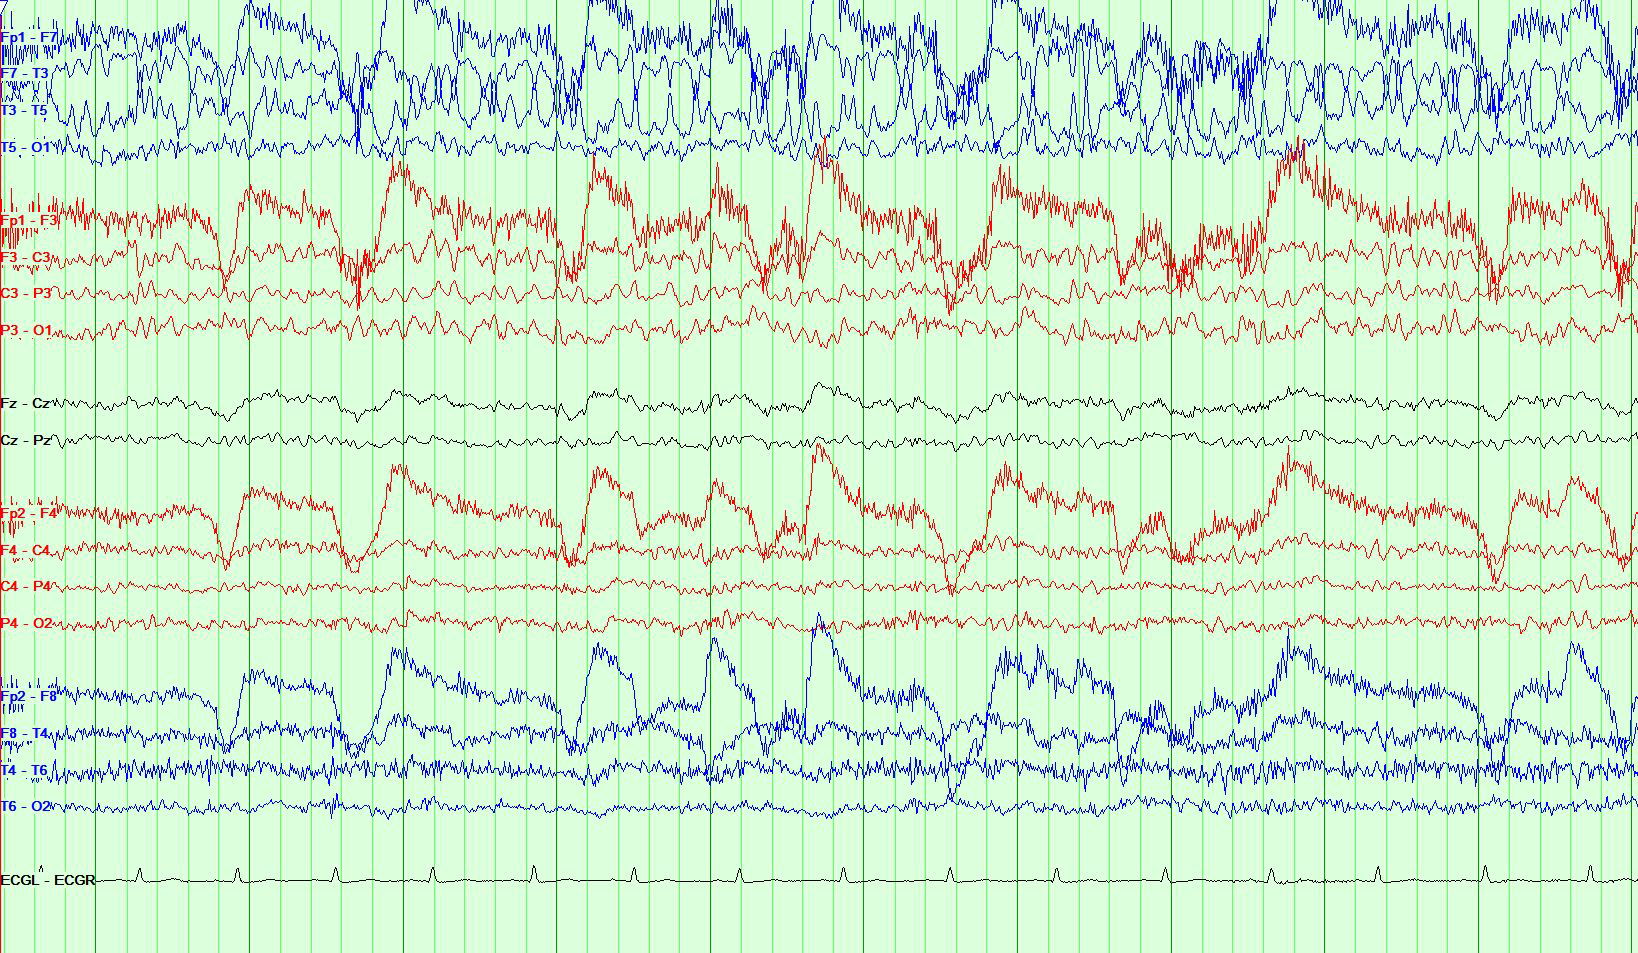 http://today.uconn.edu/wp-content/uploads/2017/03/EEG-L-side-seizure.jpg